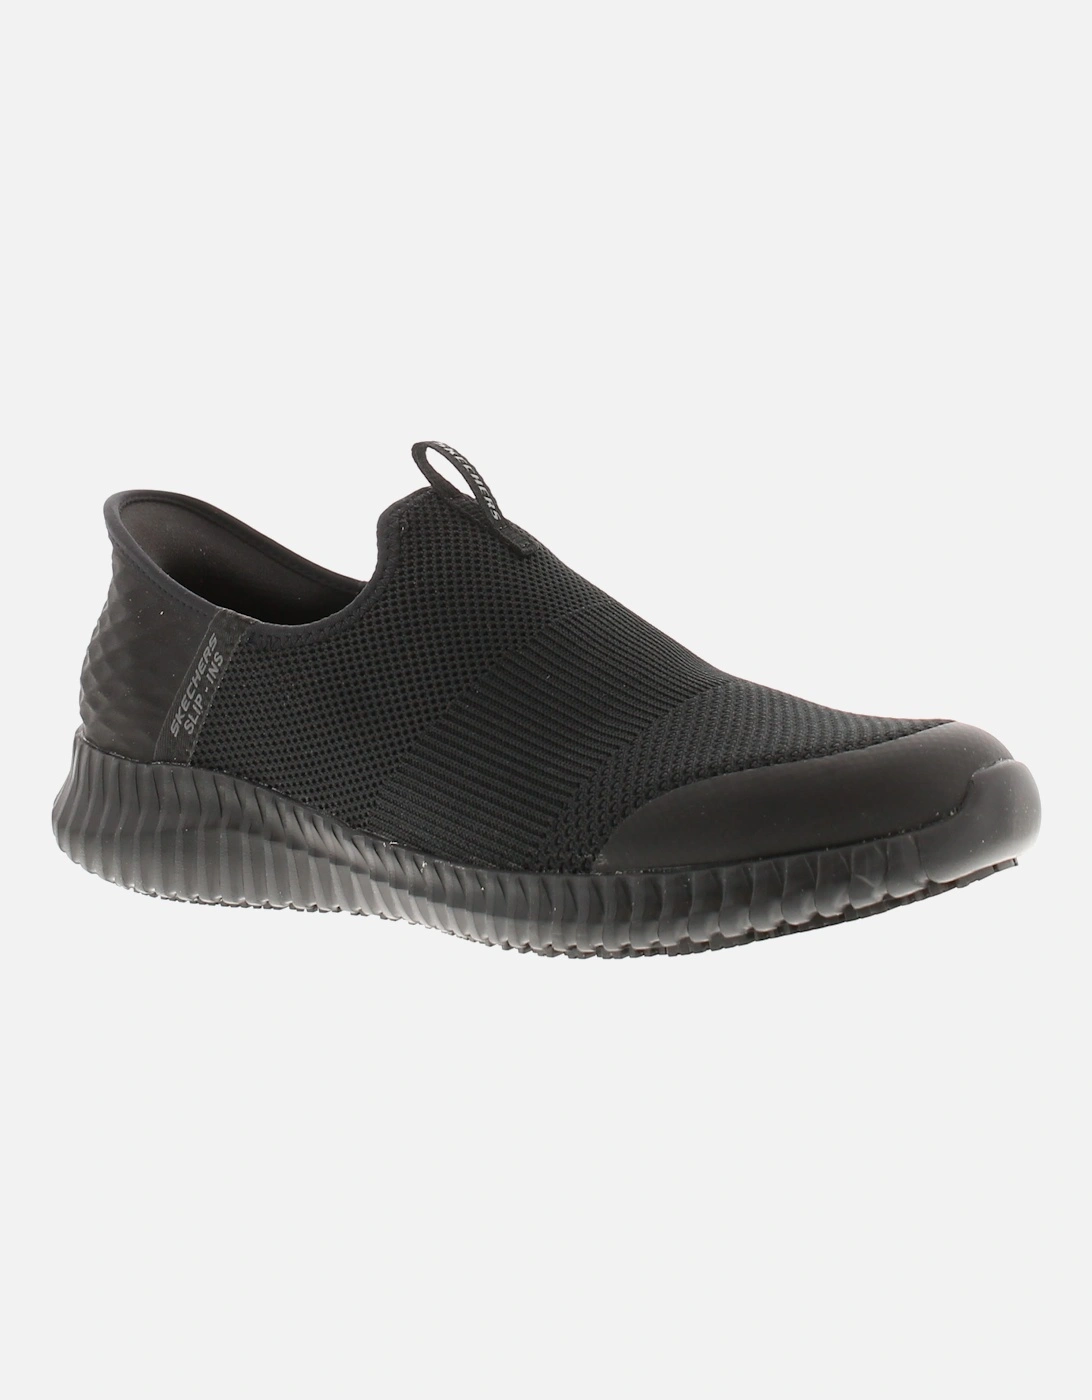 Womens Safety Shoes Trainers Cessnock Gwynedd Slip On Black UK Size 3, 6 of 5